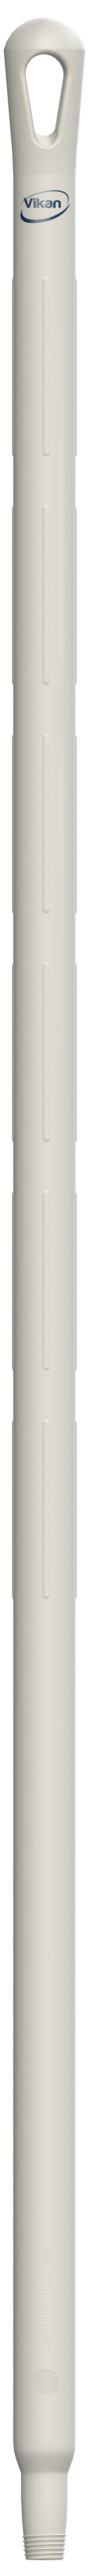 Vikan 29605 wit ultra hygiene kunststof steel 130cm